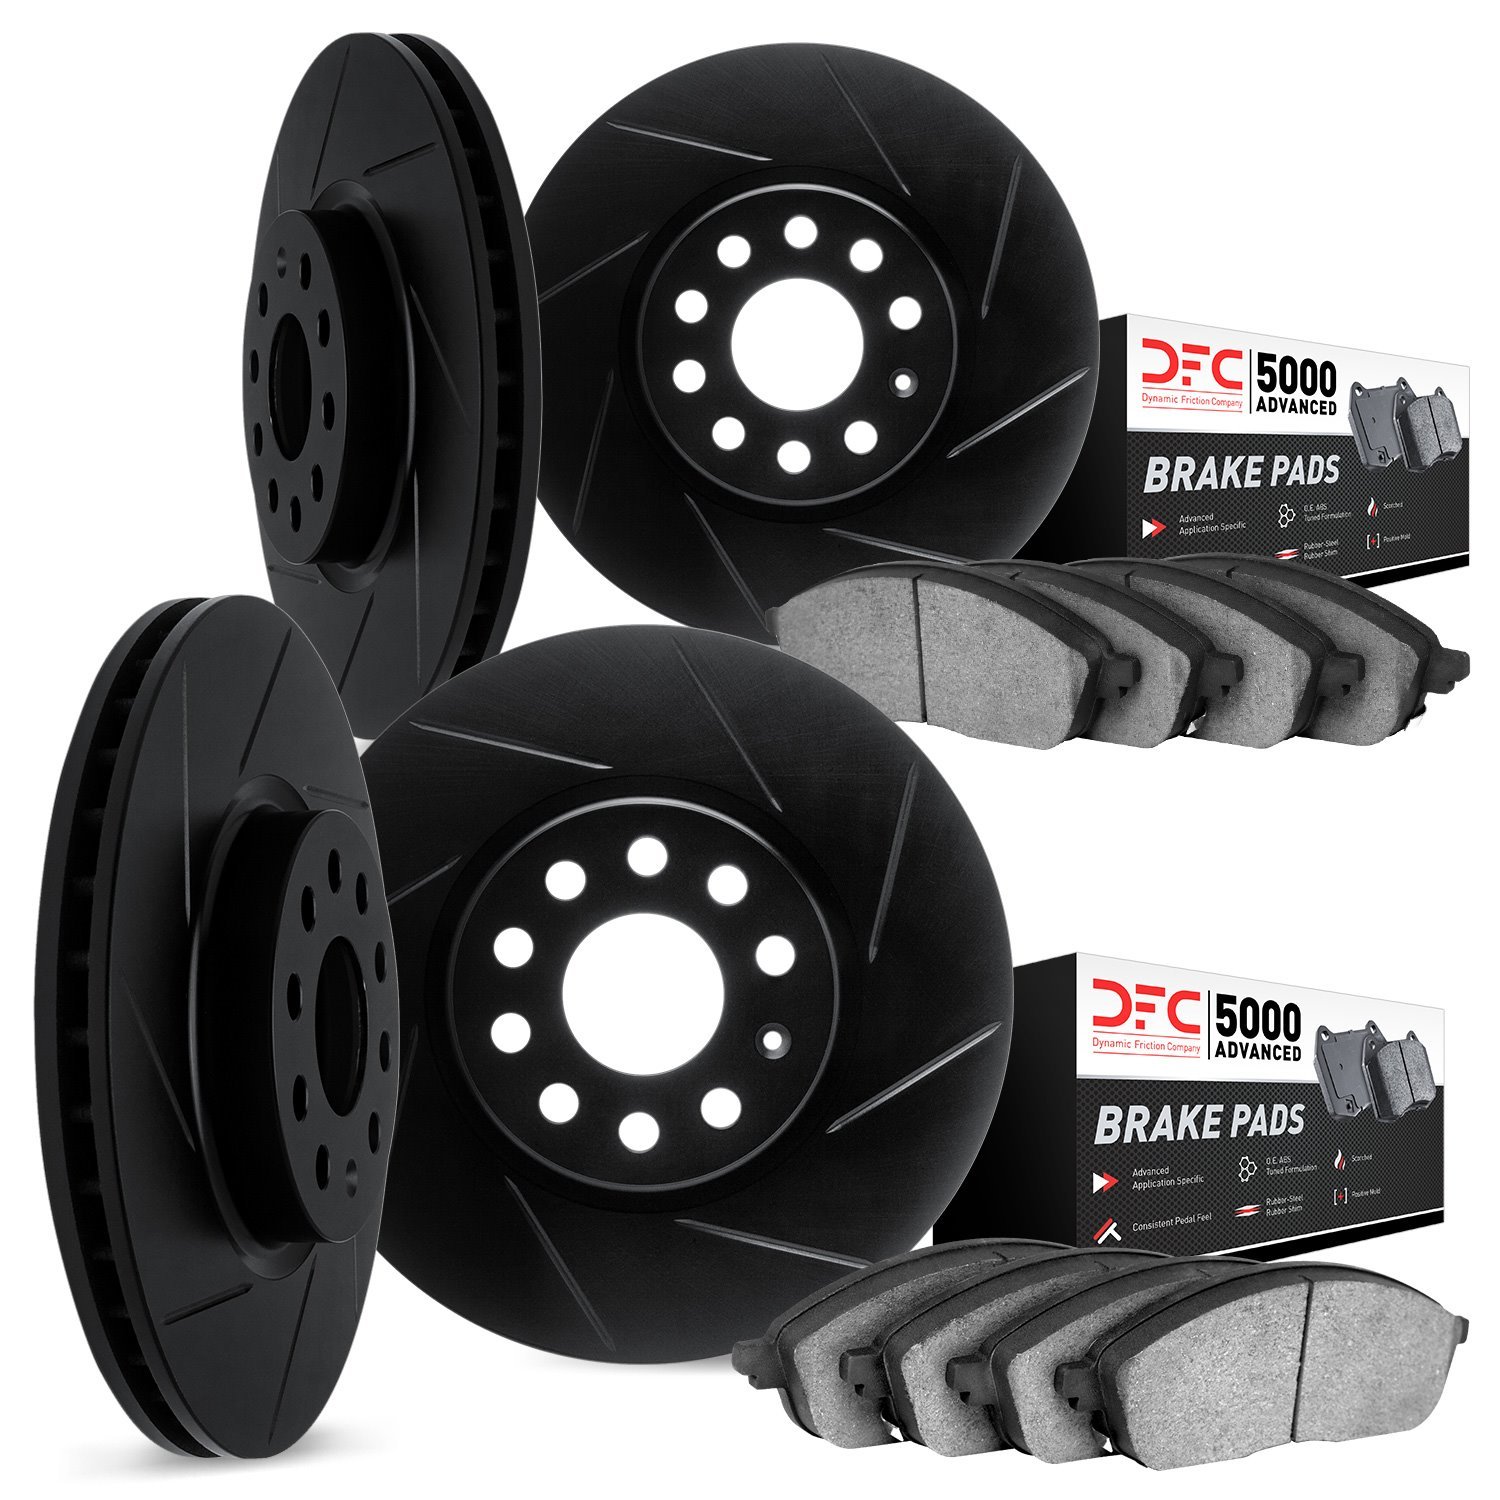 3514-67047 Slotted Brake Rotors w/5000 Advanced Brake Pads Kit & Hardware [Black], 2006-2020 Infiniti/Nissan, Position: Front an